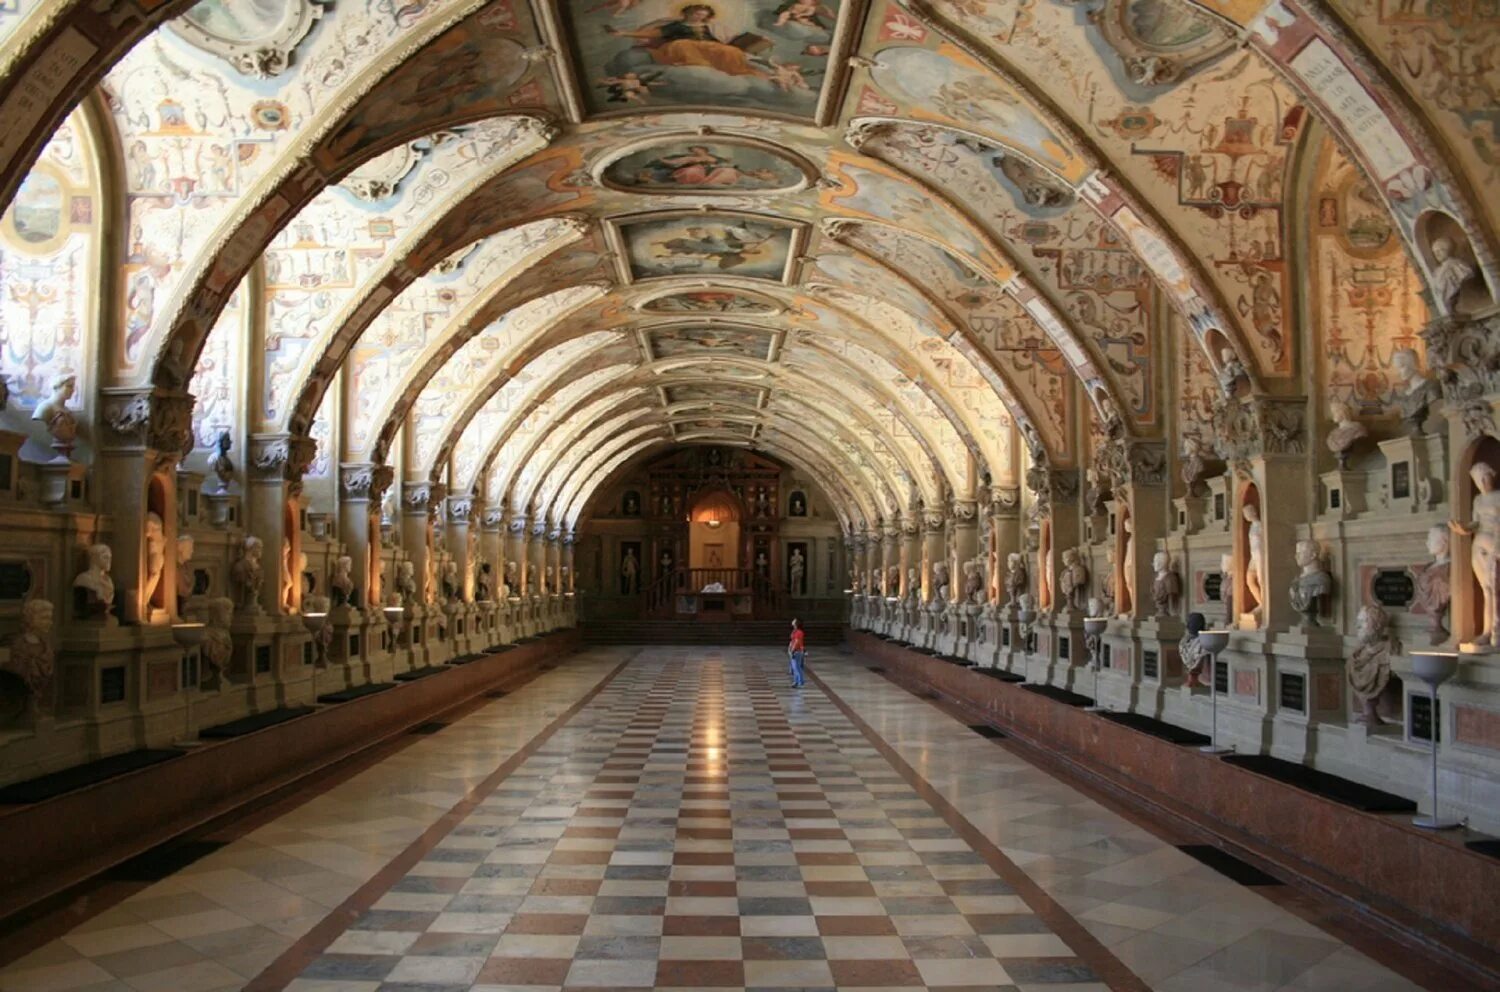 Внутри. Нойшванштайн внутри. Замок Нойшванштайн в Германии изнутри. Нойшванштайн замок интерьеры. Нойшванштайн коридор.